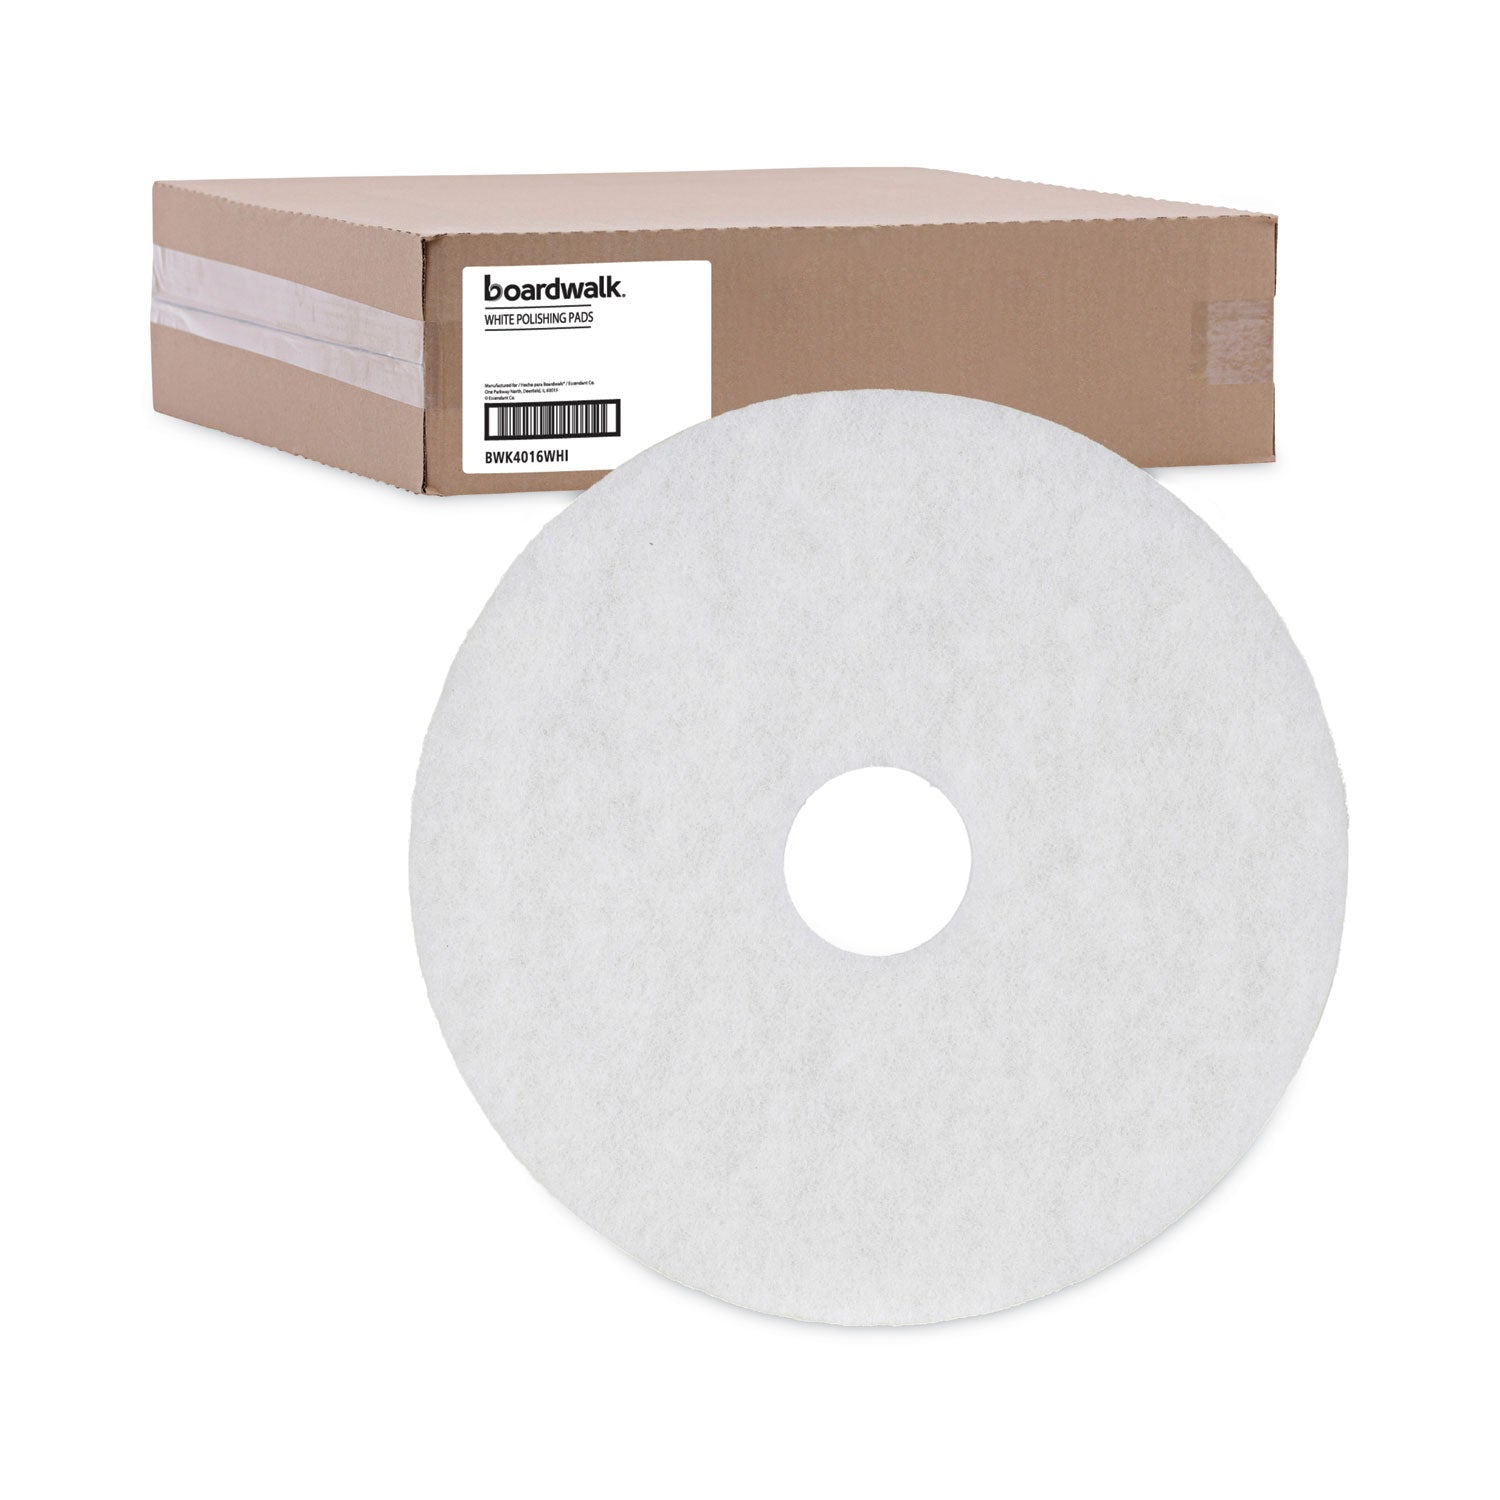 polishing-floor-pads-16-diameter-white-5-carton_bwk4016whi - 5